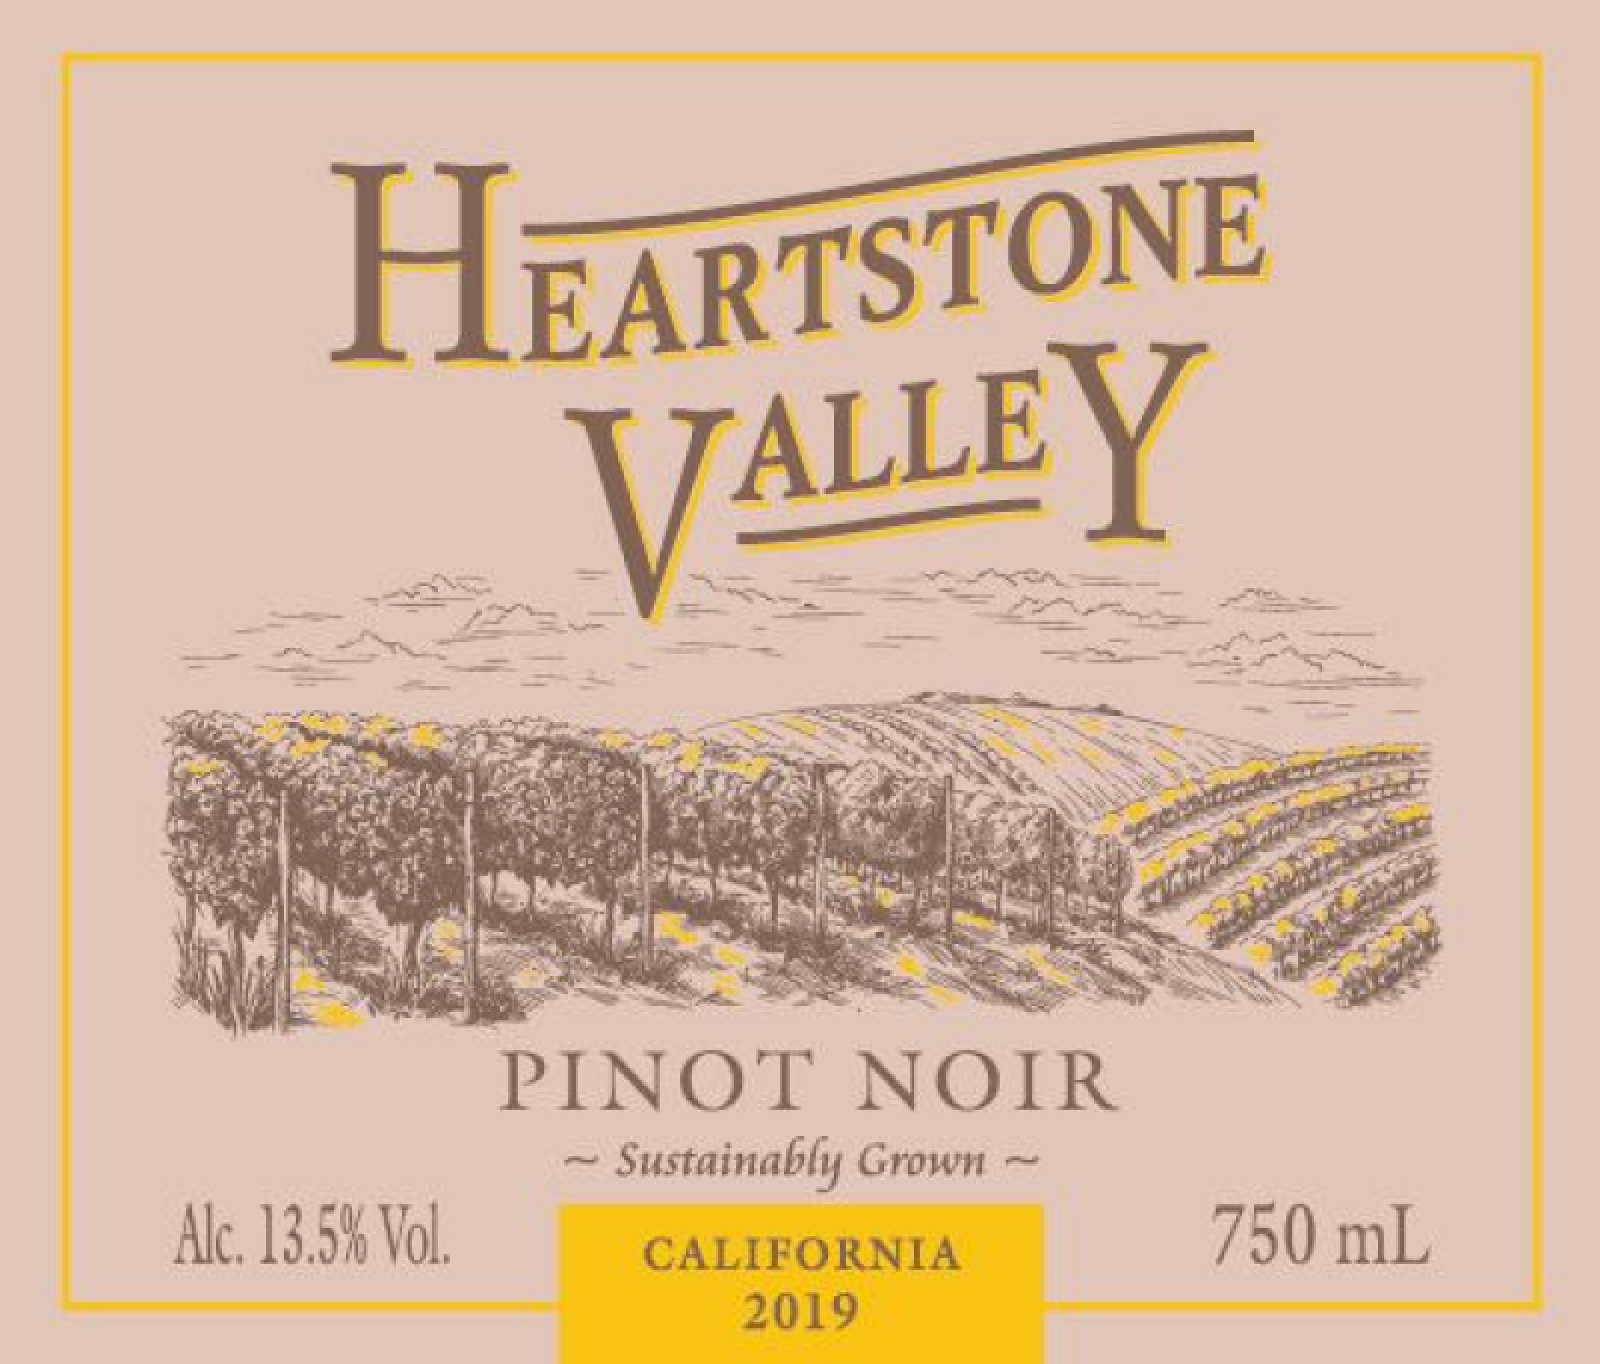 Heartstone Valley Pinot Noir 2019